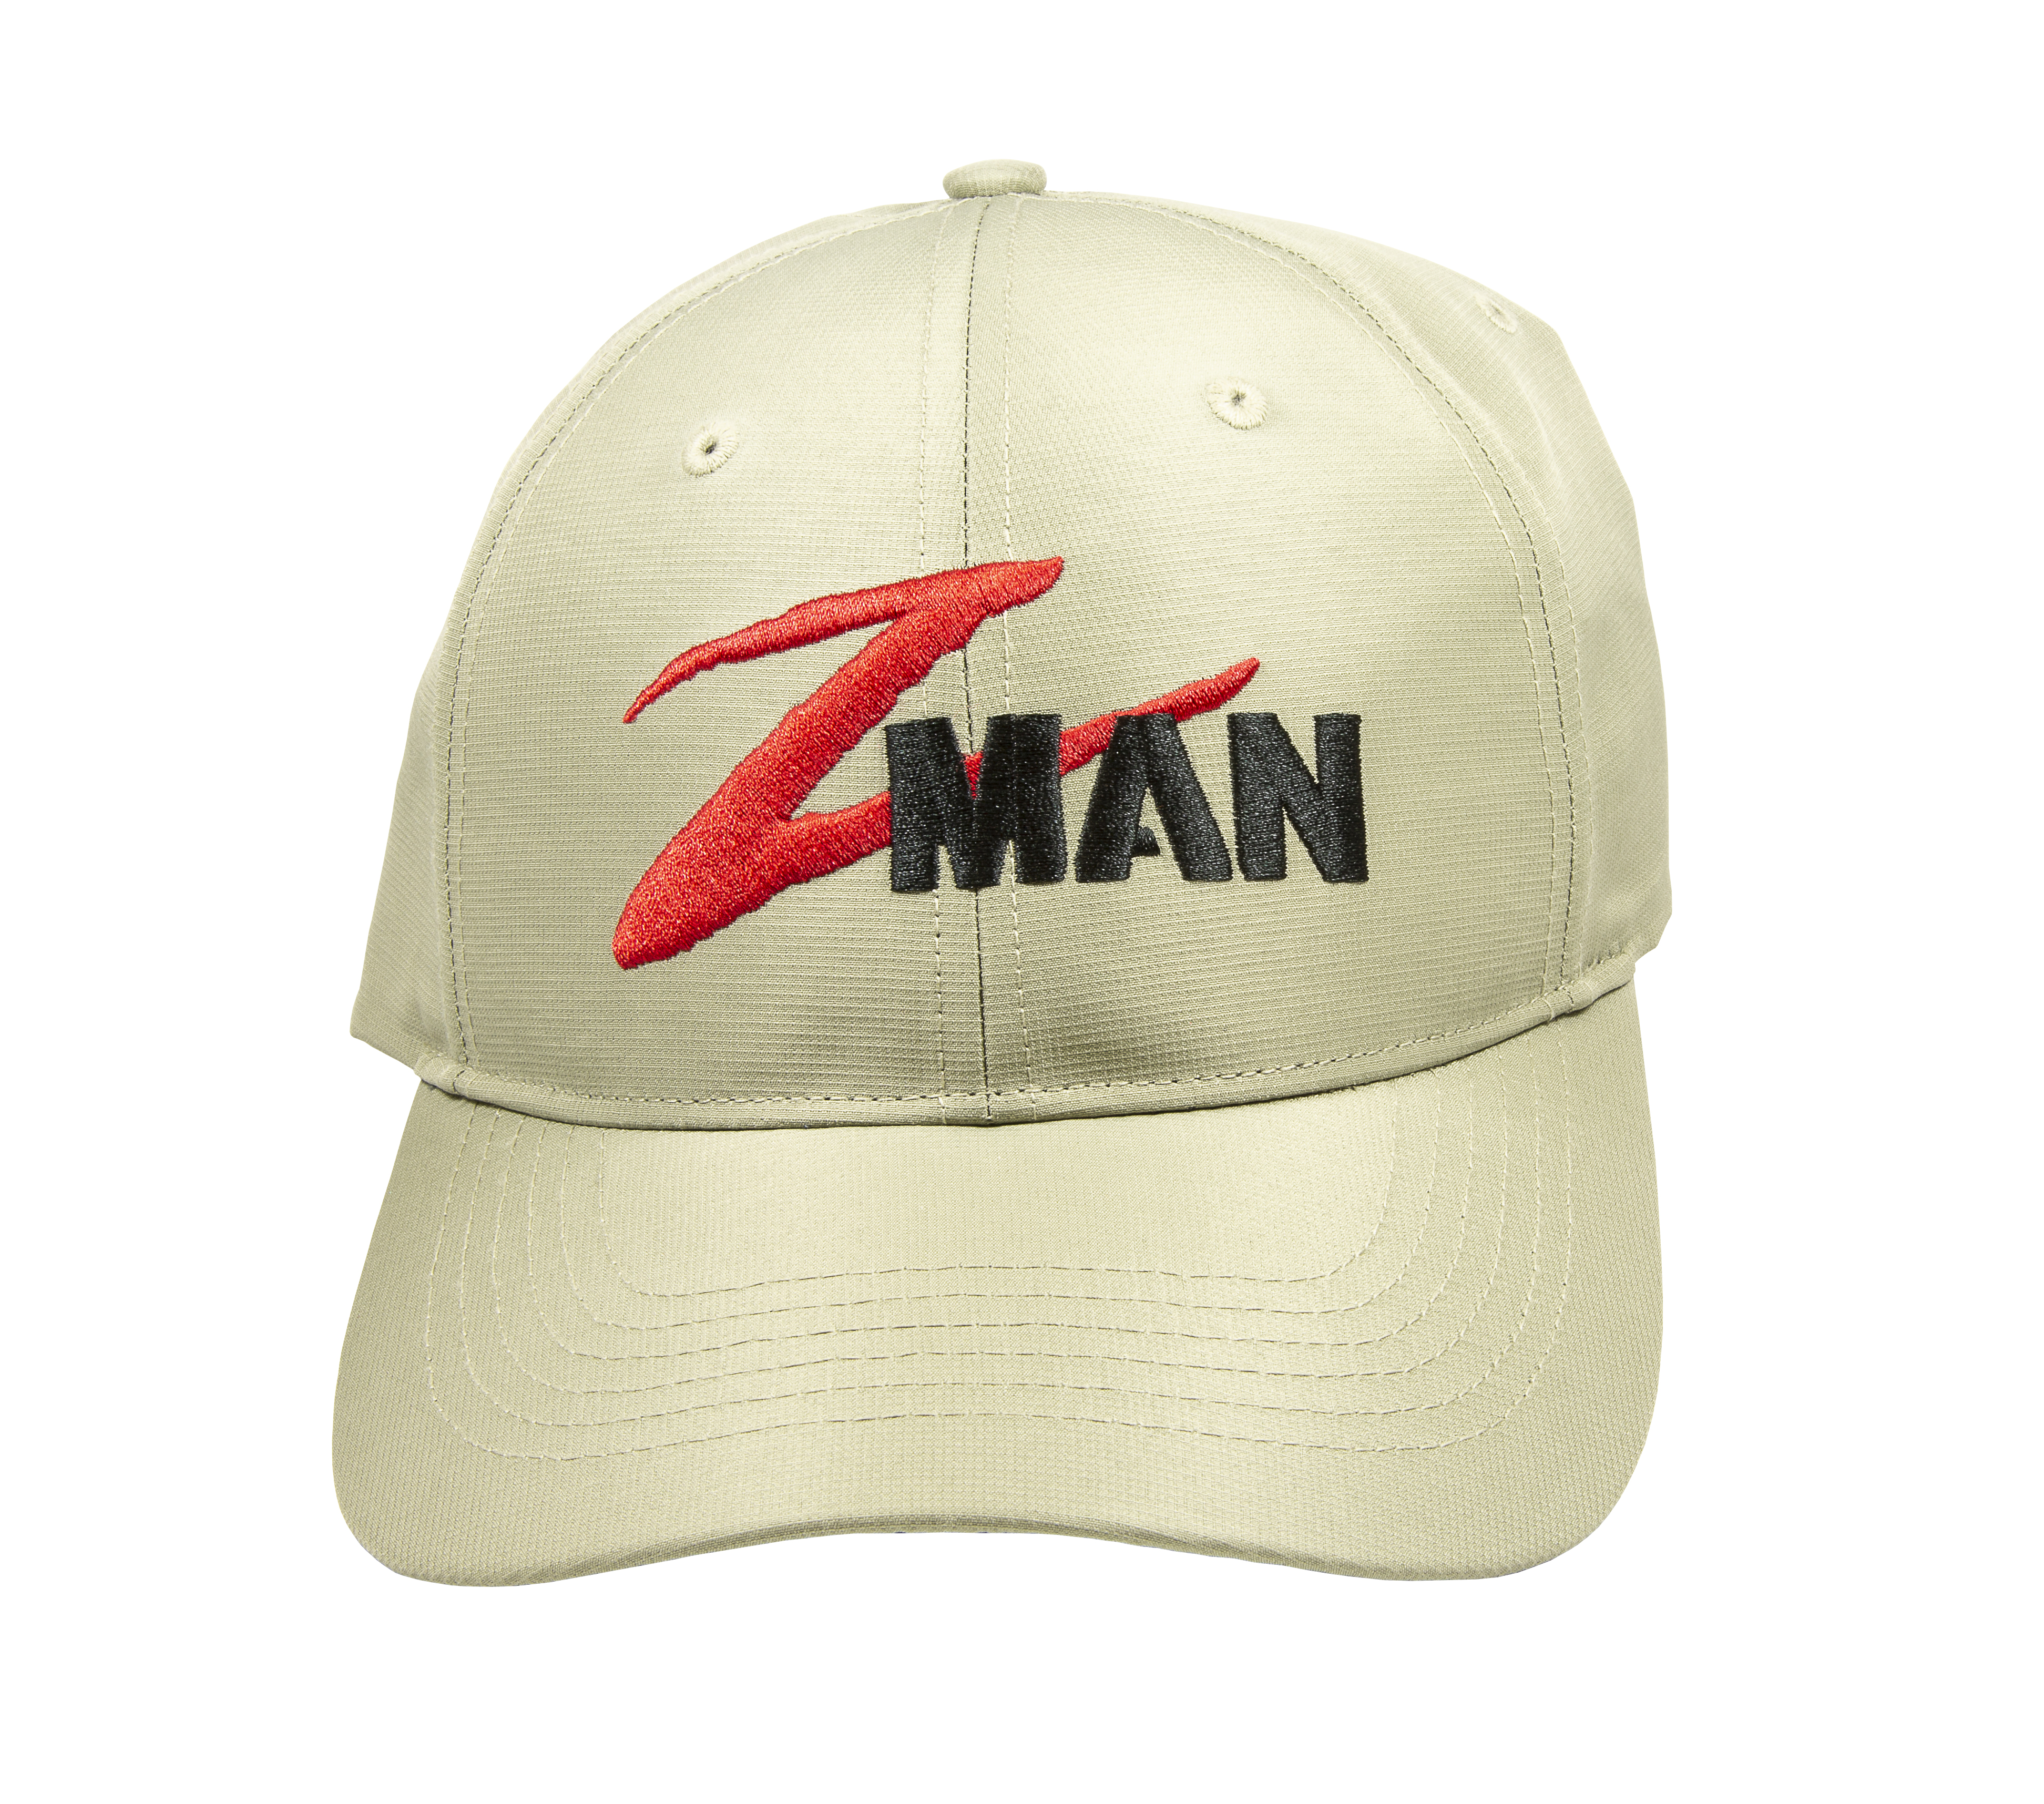 https://mcproductimages.s3-us-west-2.amazonaws.com/z-man/structured-tech-hat/ZMAN121.jpg